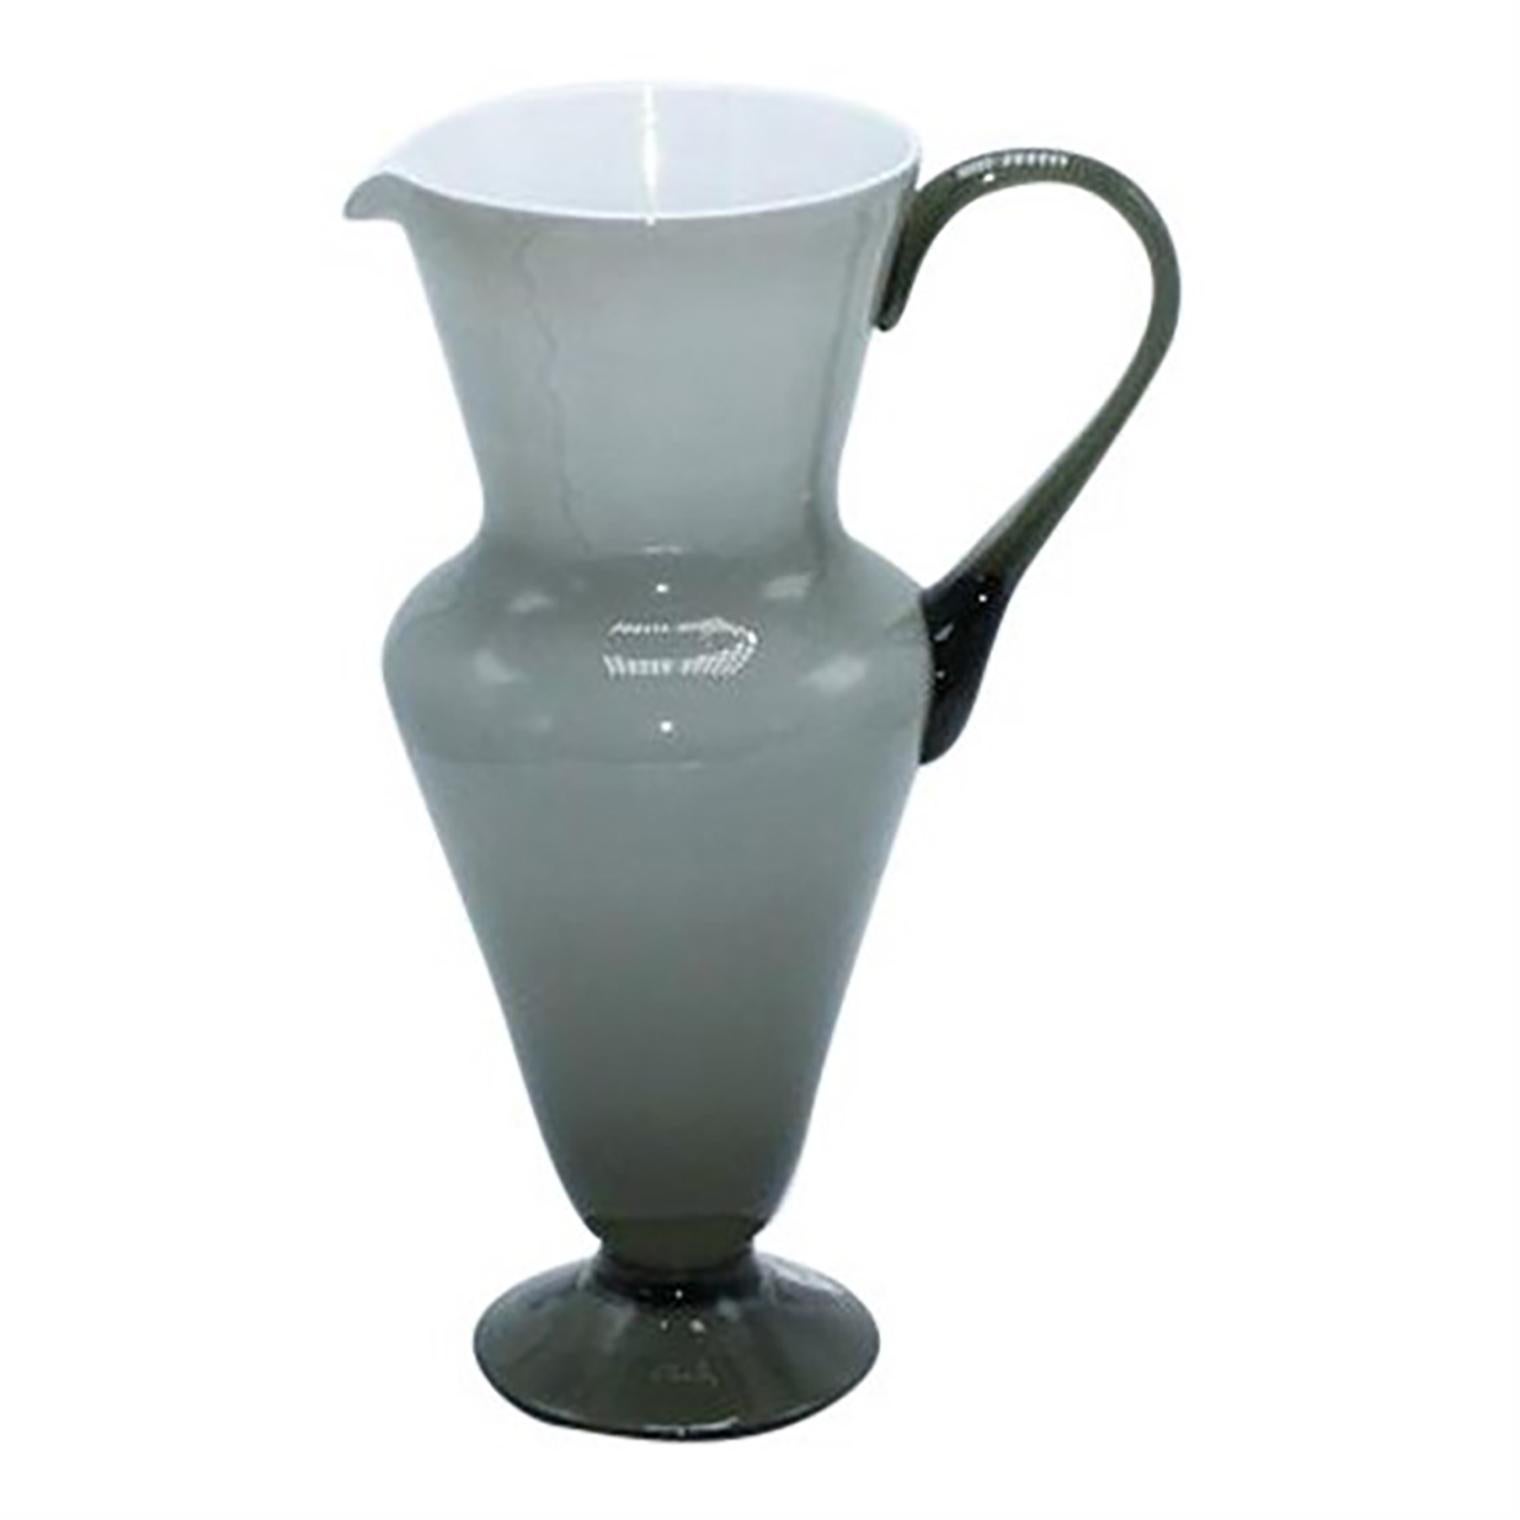 Gray Balboa white cased Murano glass pitcher, circa 1960.